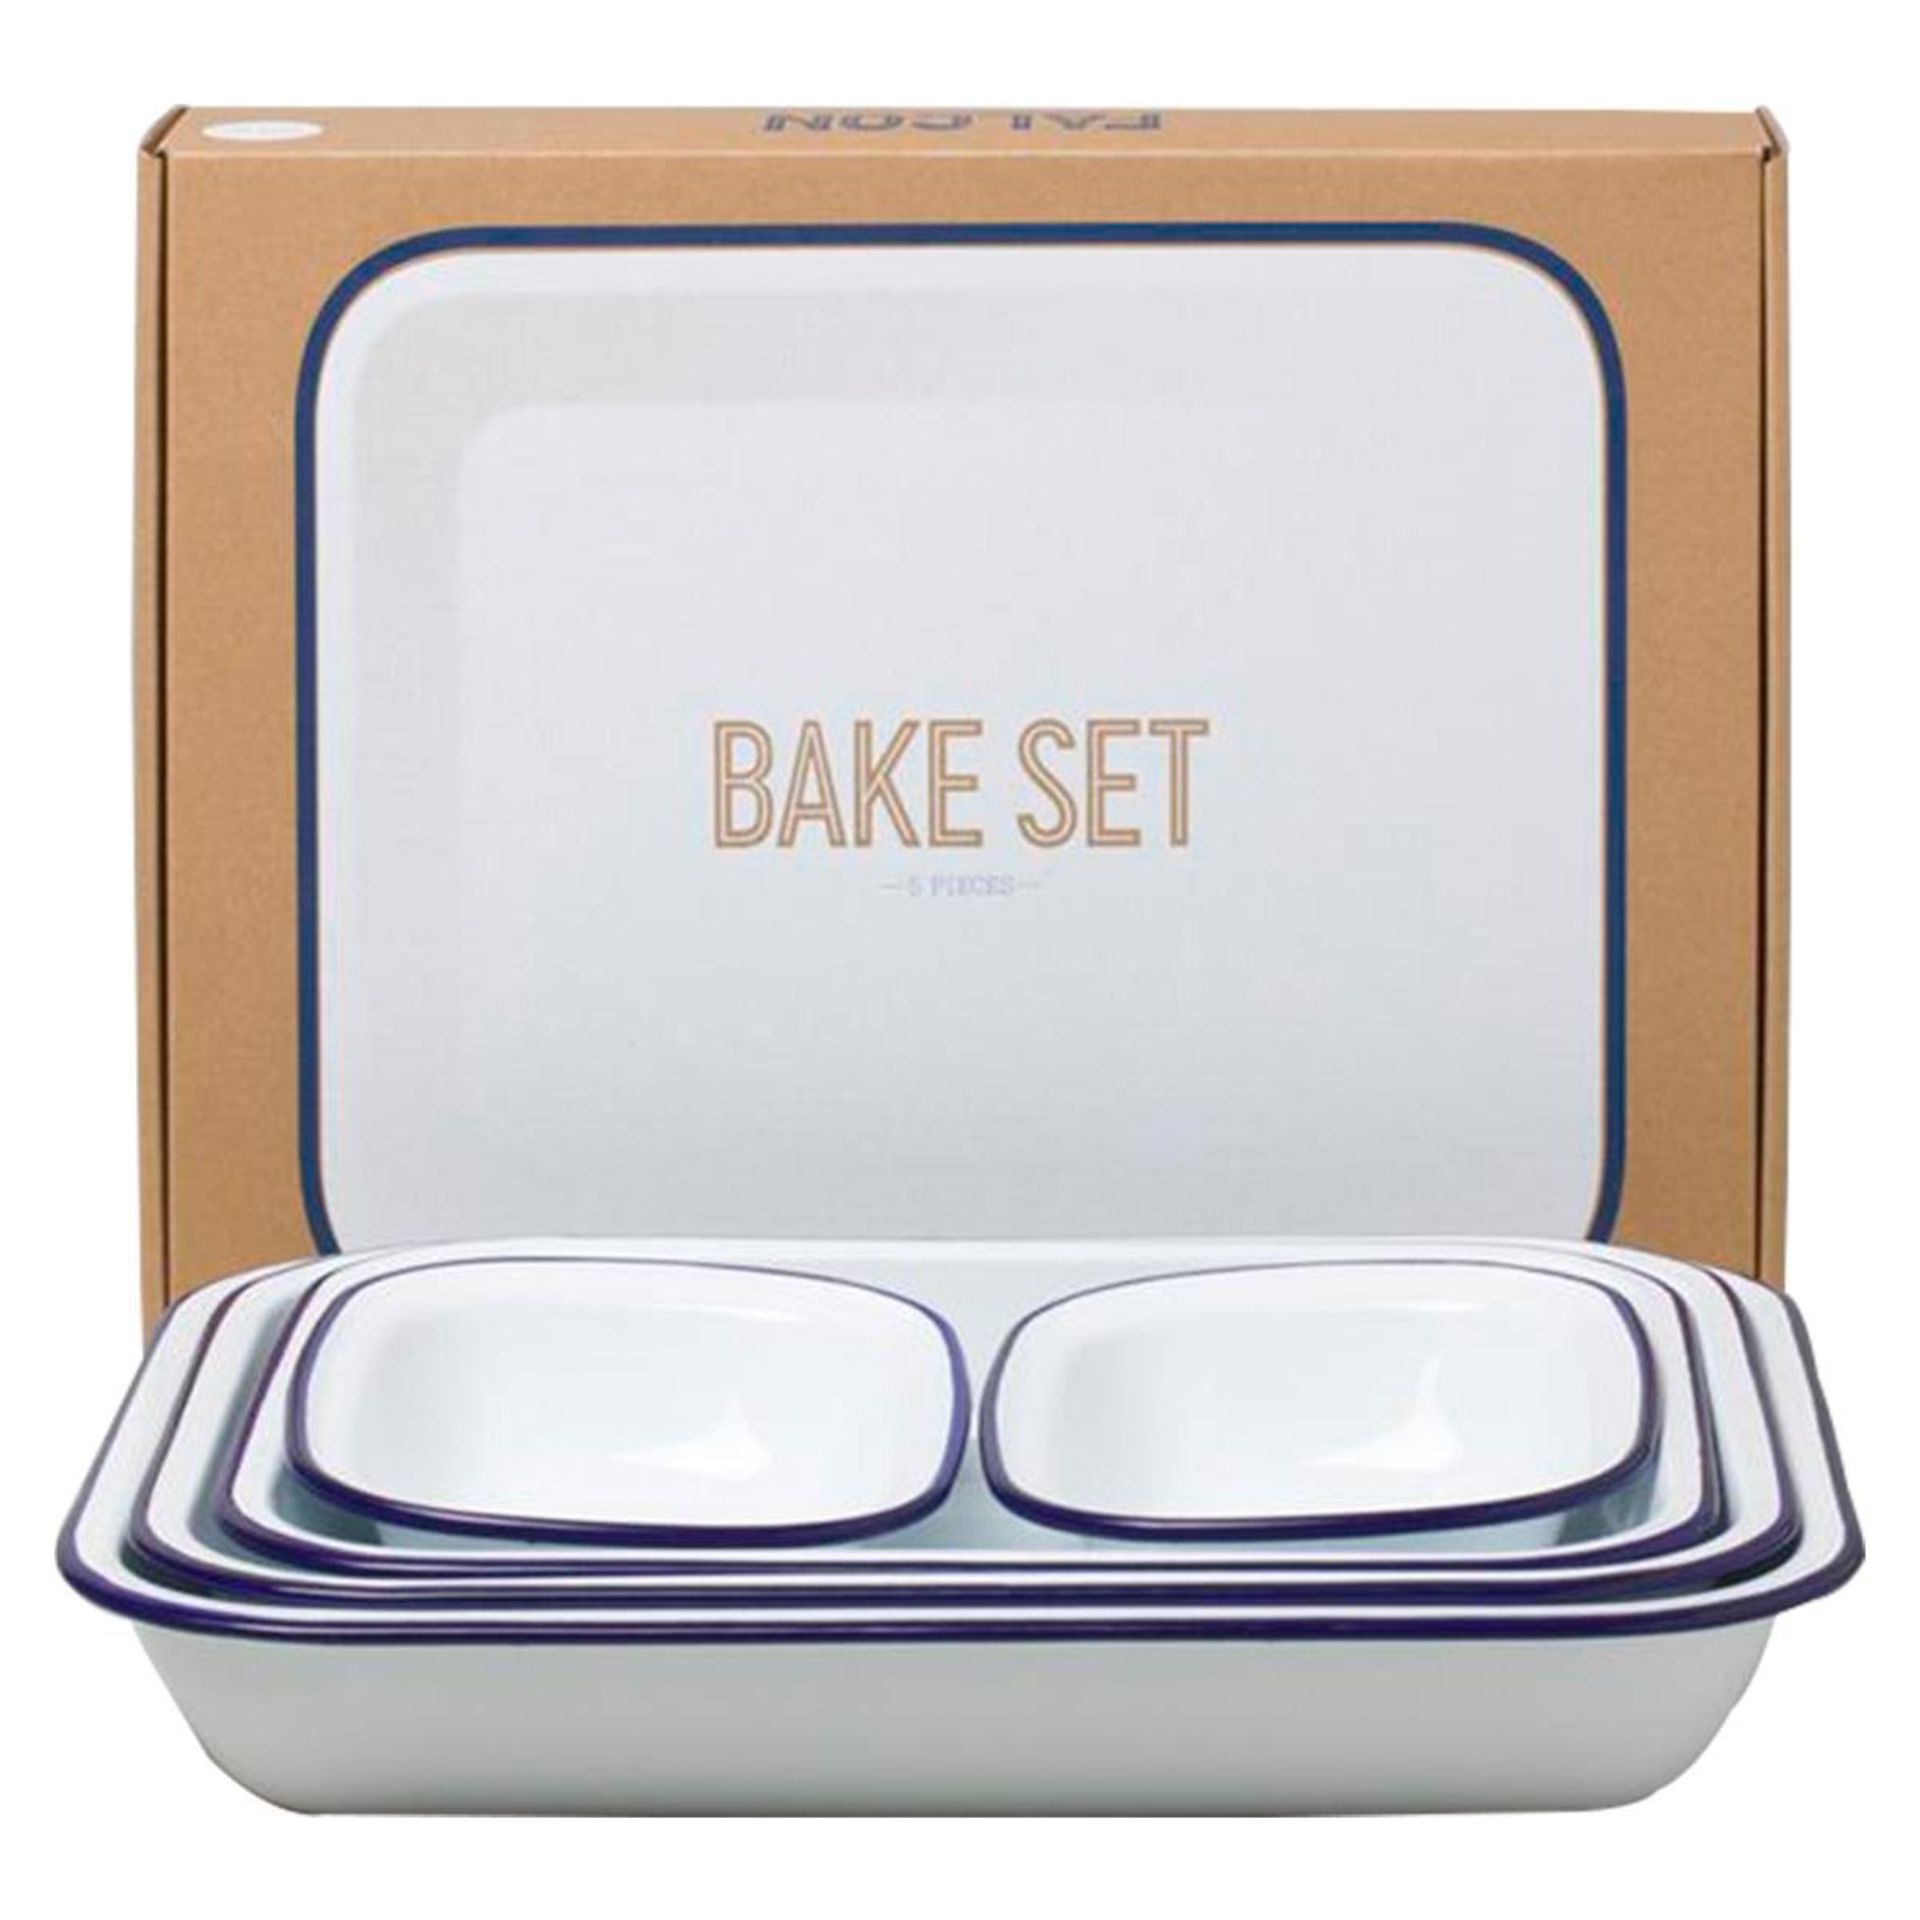 Falcon Enamelware Bake Set White and Blue Rim RRP £89.99